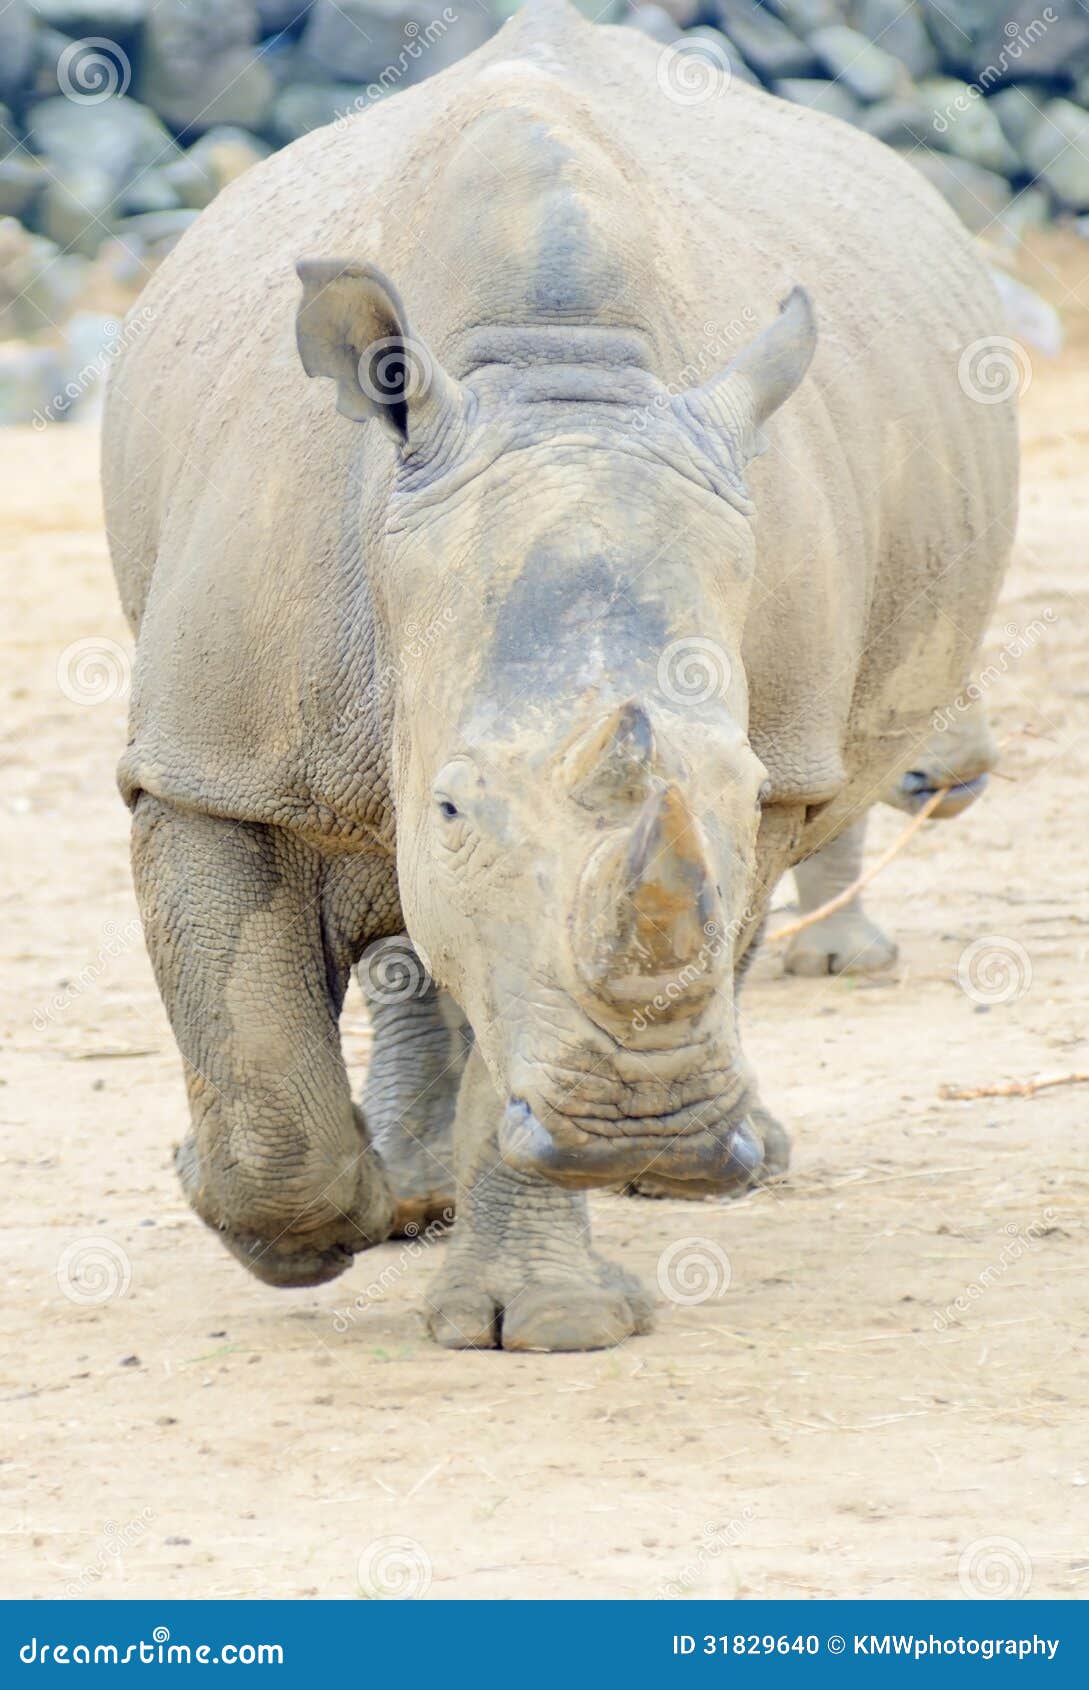 Rhino charging stock photo. Image of attack, mammal, horn - 31829640